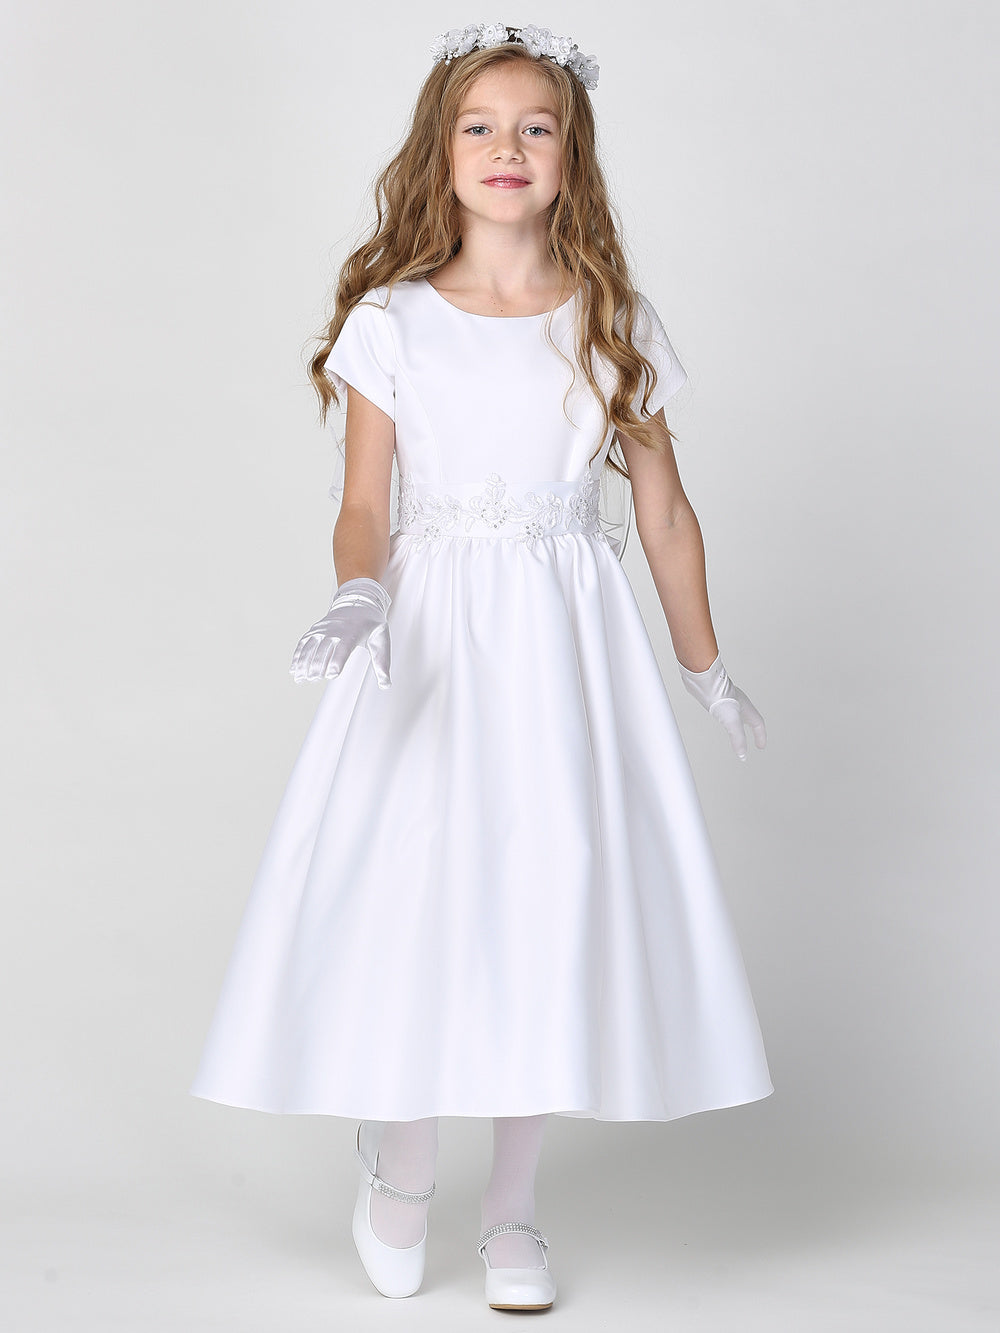 Girls White Communion Dress